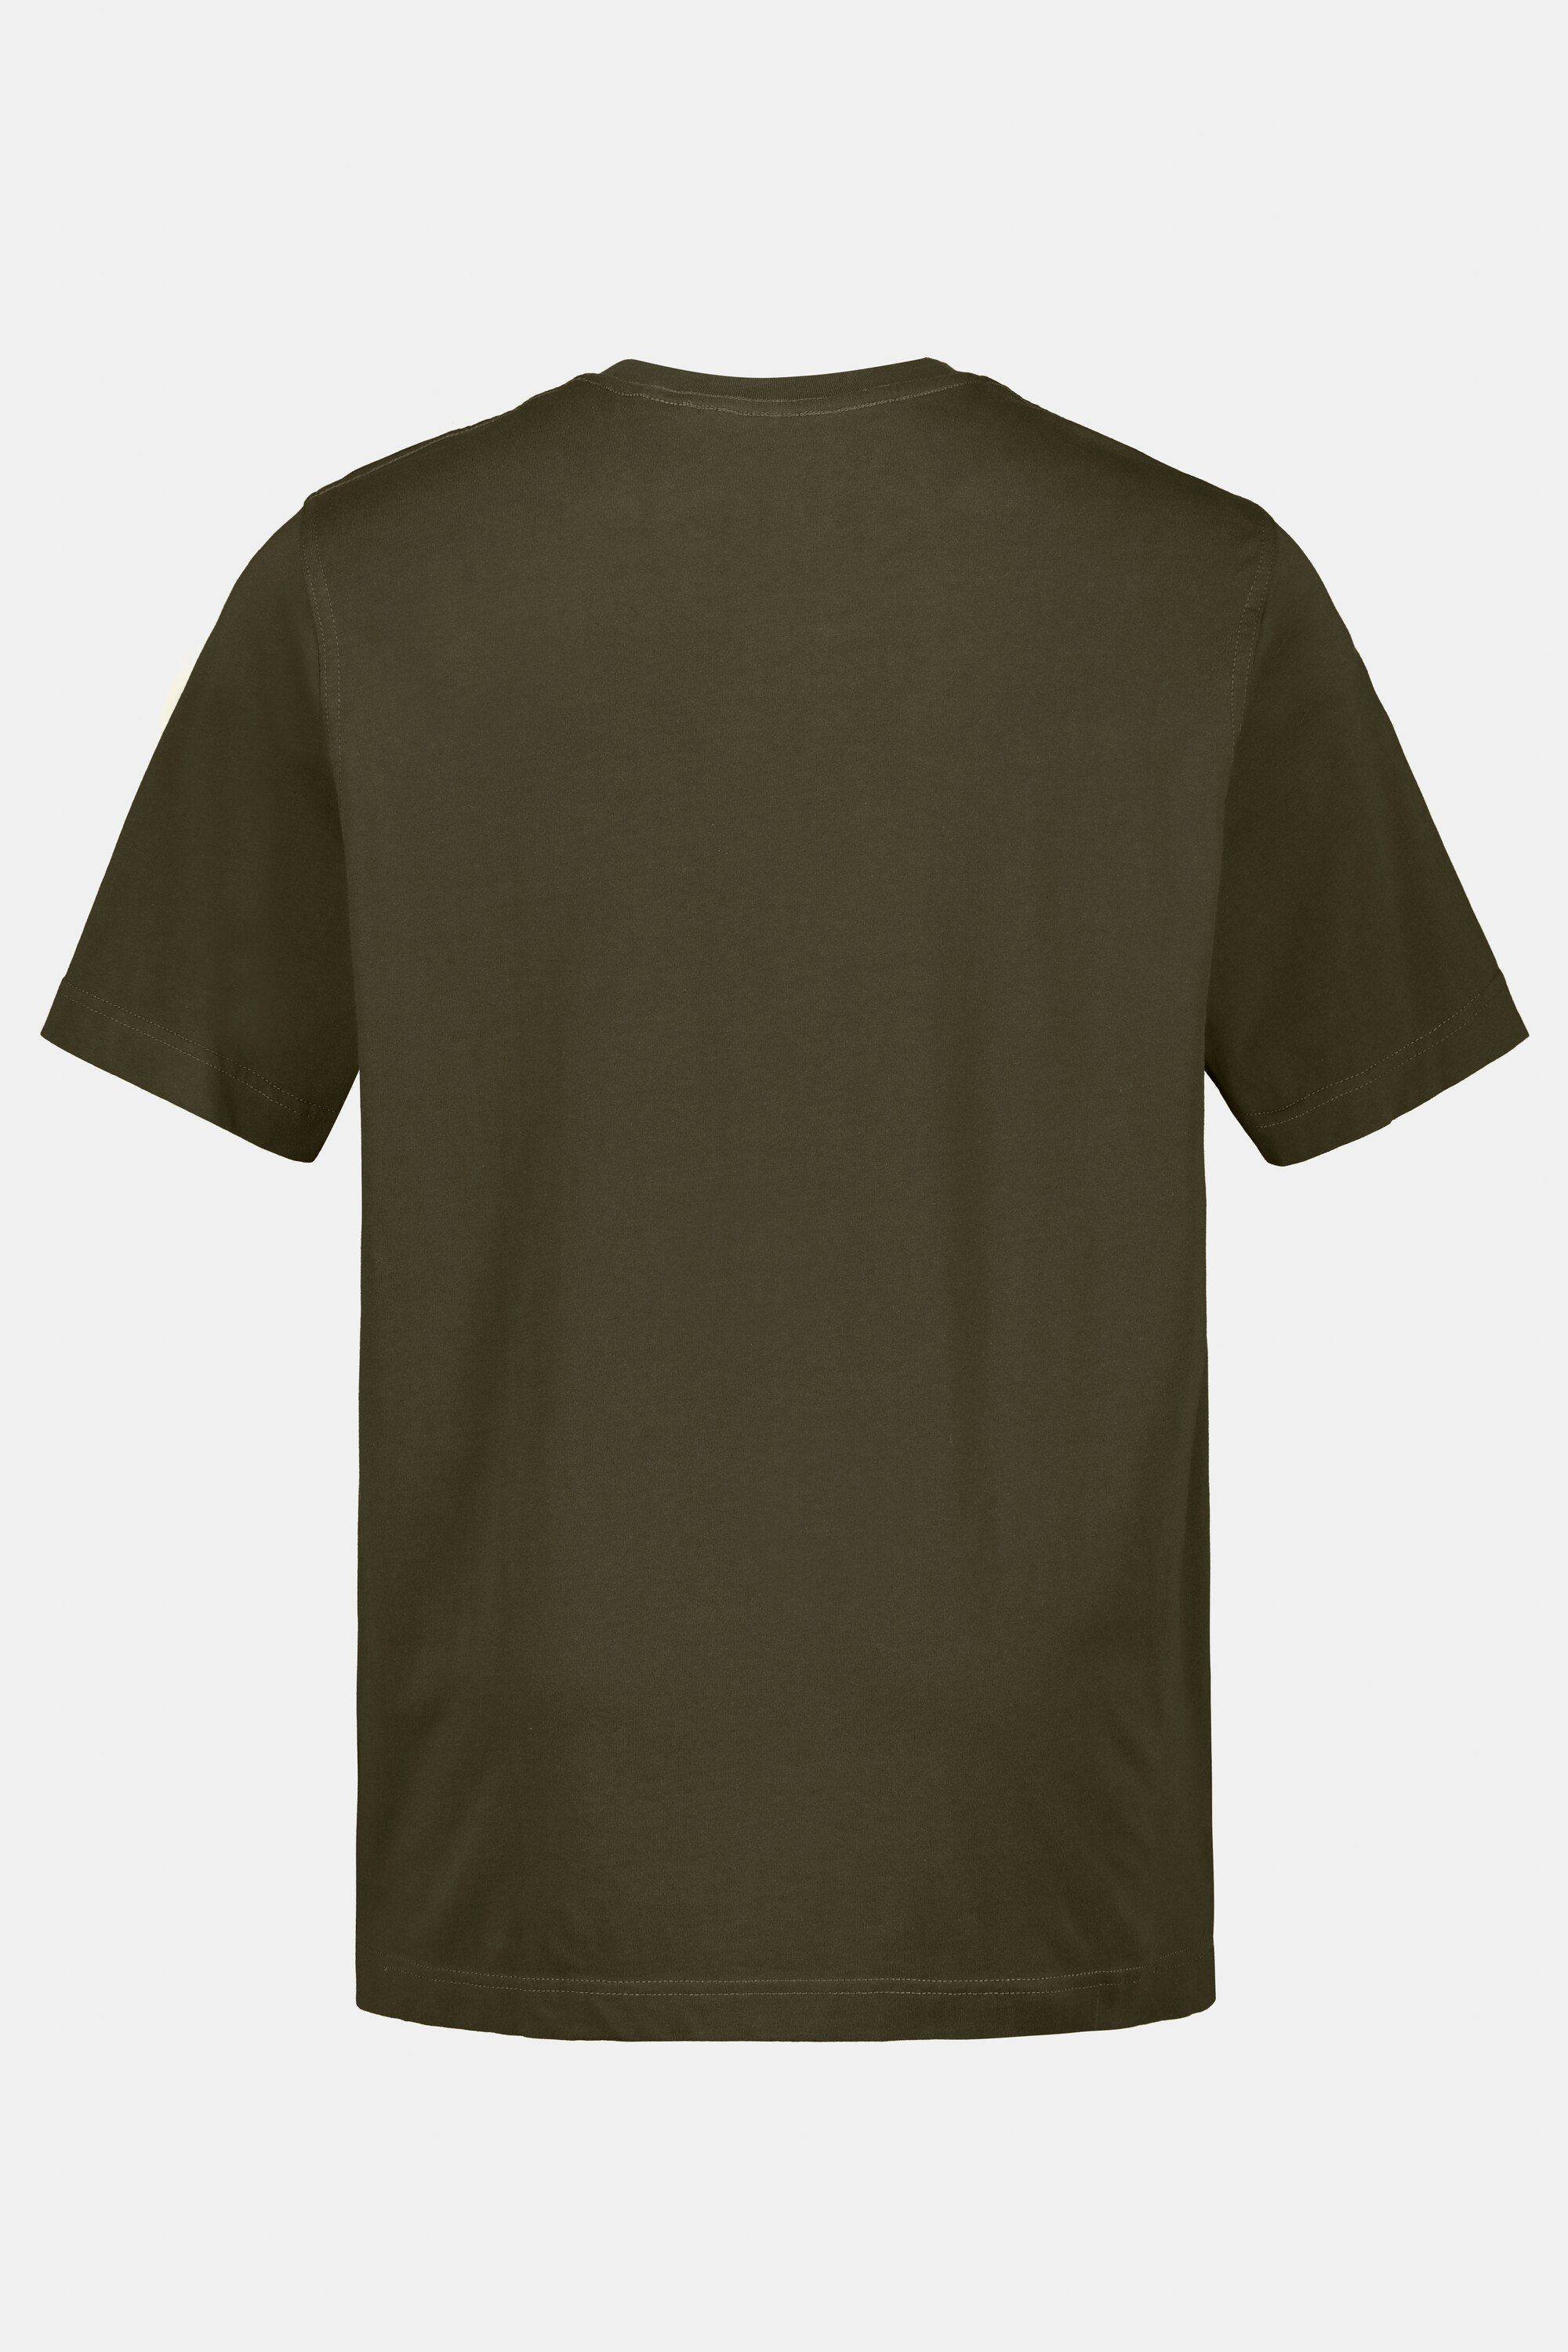 T-Shirt Basic dunkel gekämmte Baumwolle 8XL bis oliv JP1880 Rundhals T-Shirt